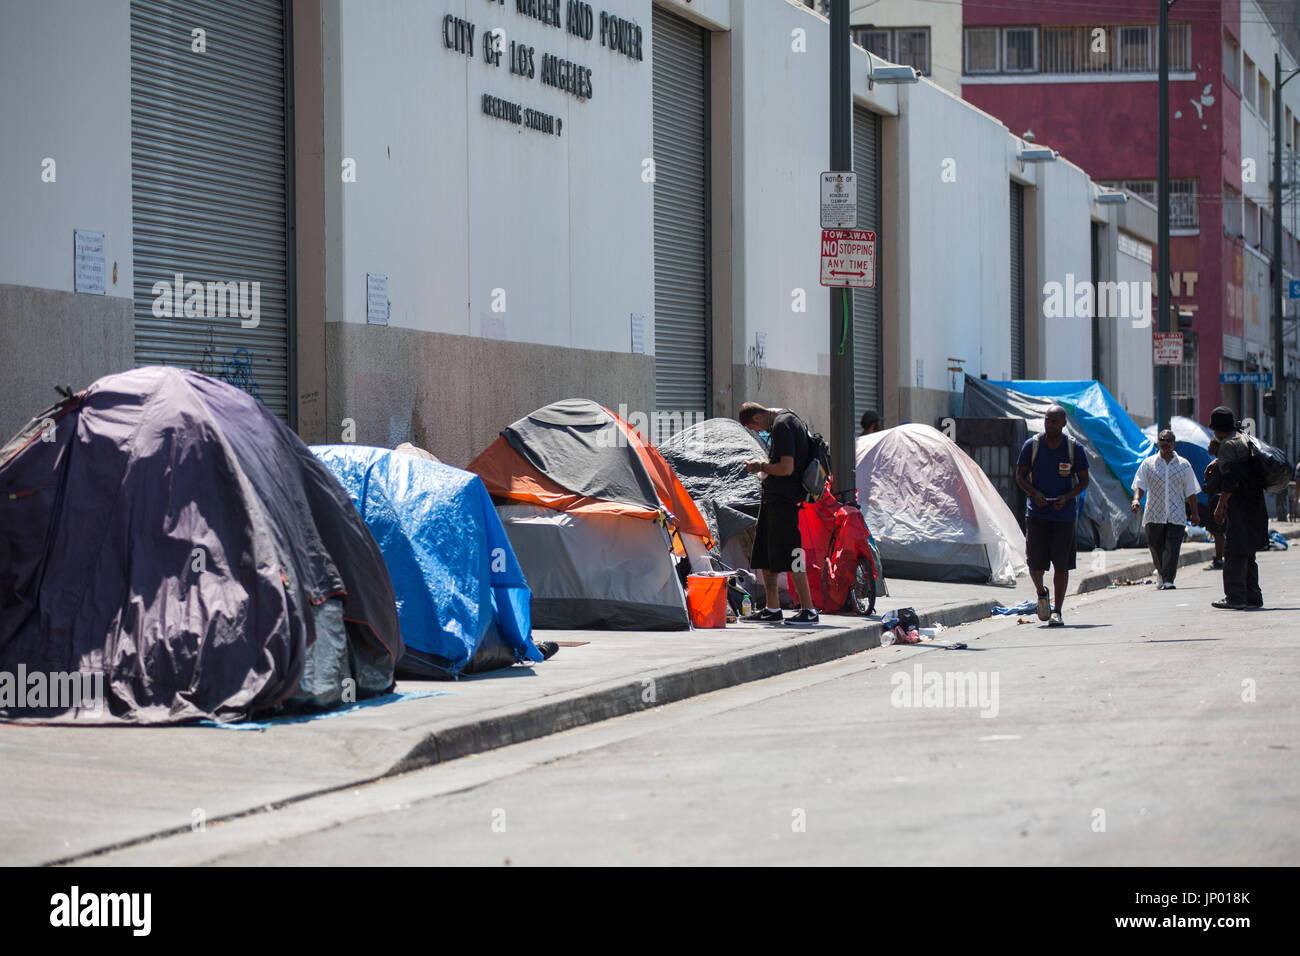 los-angeles-california-usa-26th-july-2017-tents-belonging-to-homeless-JP018K.jpg